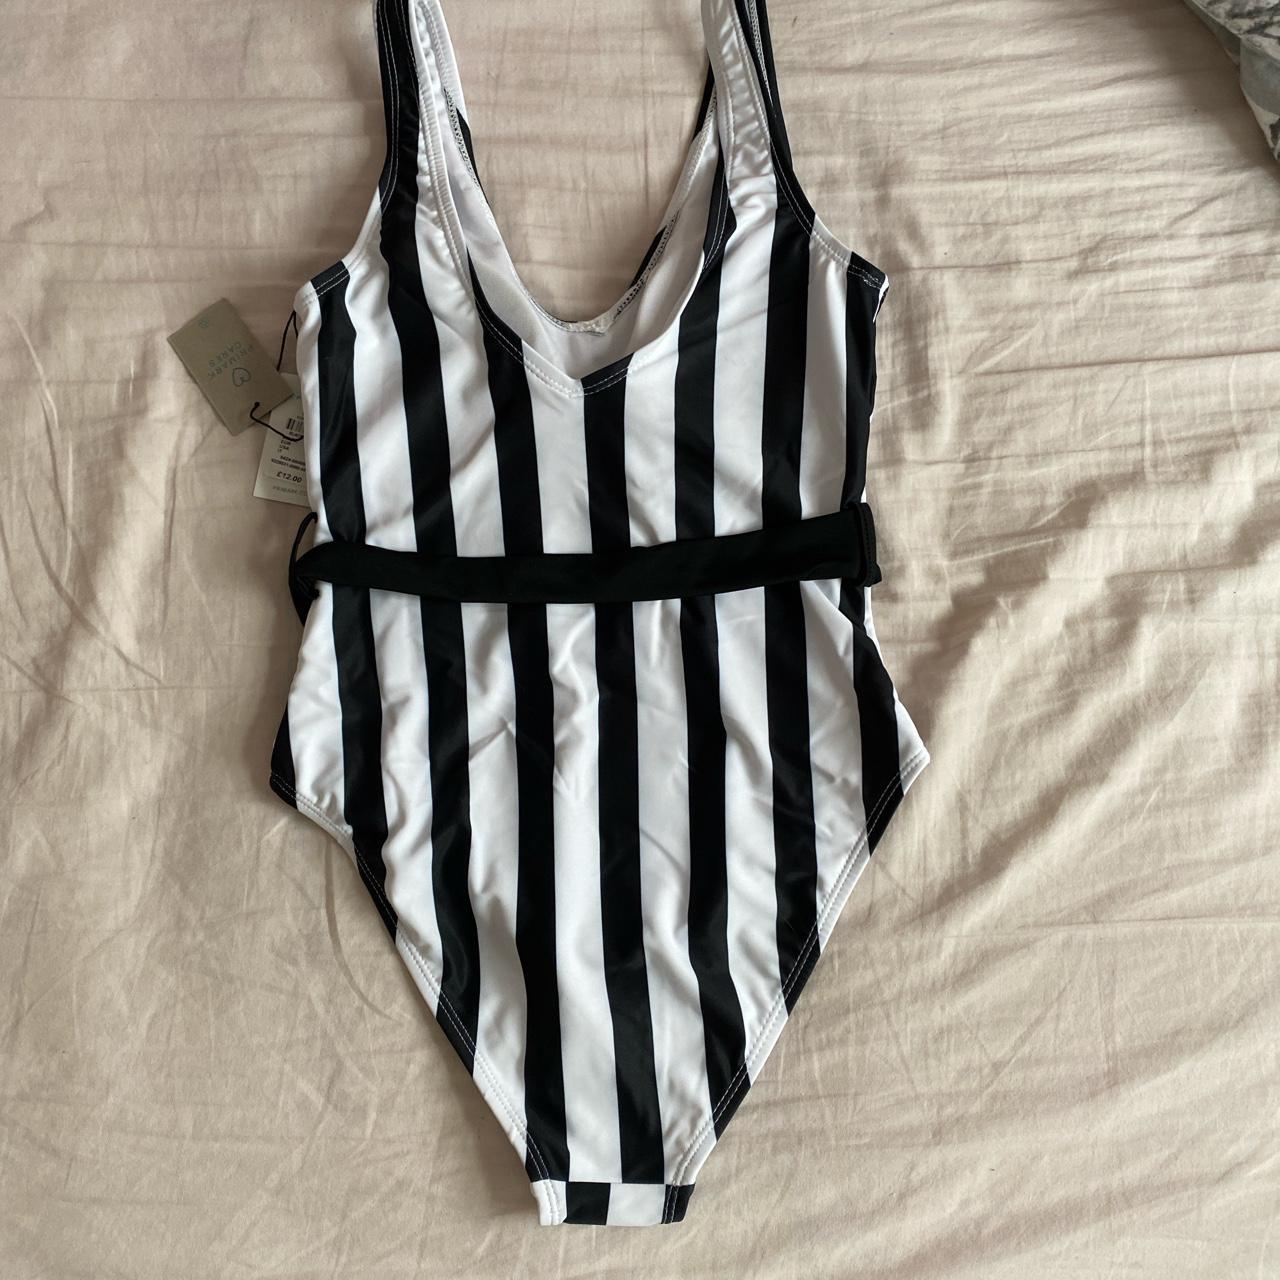 Black and white striped Primark swimming costume,... - Depop